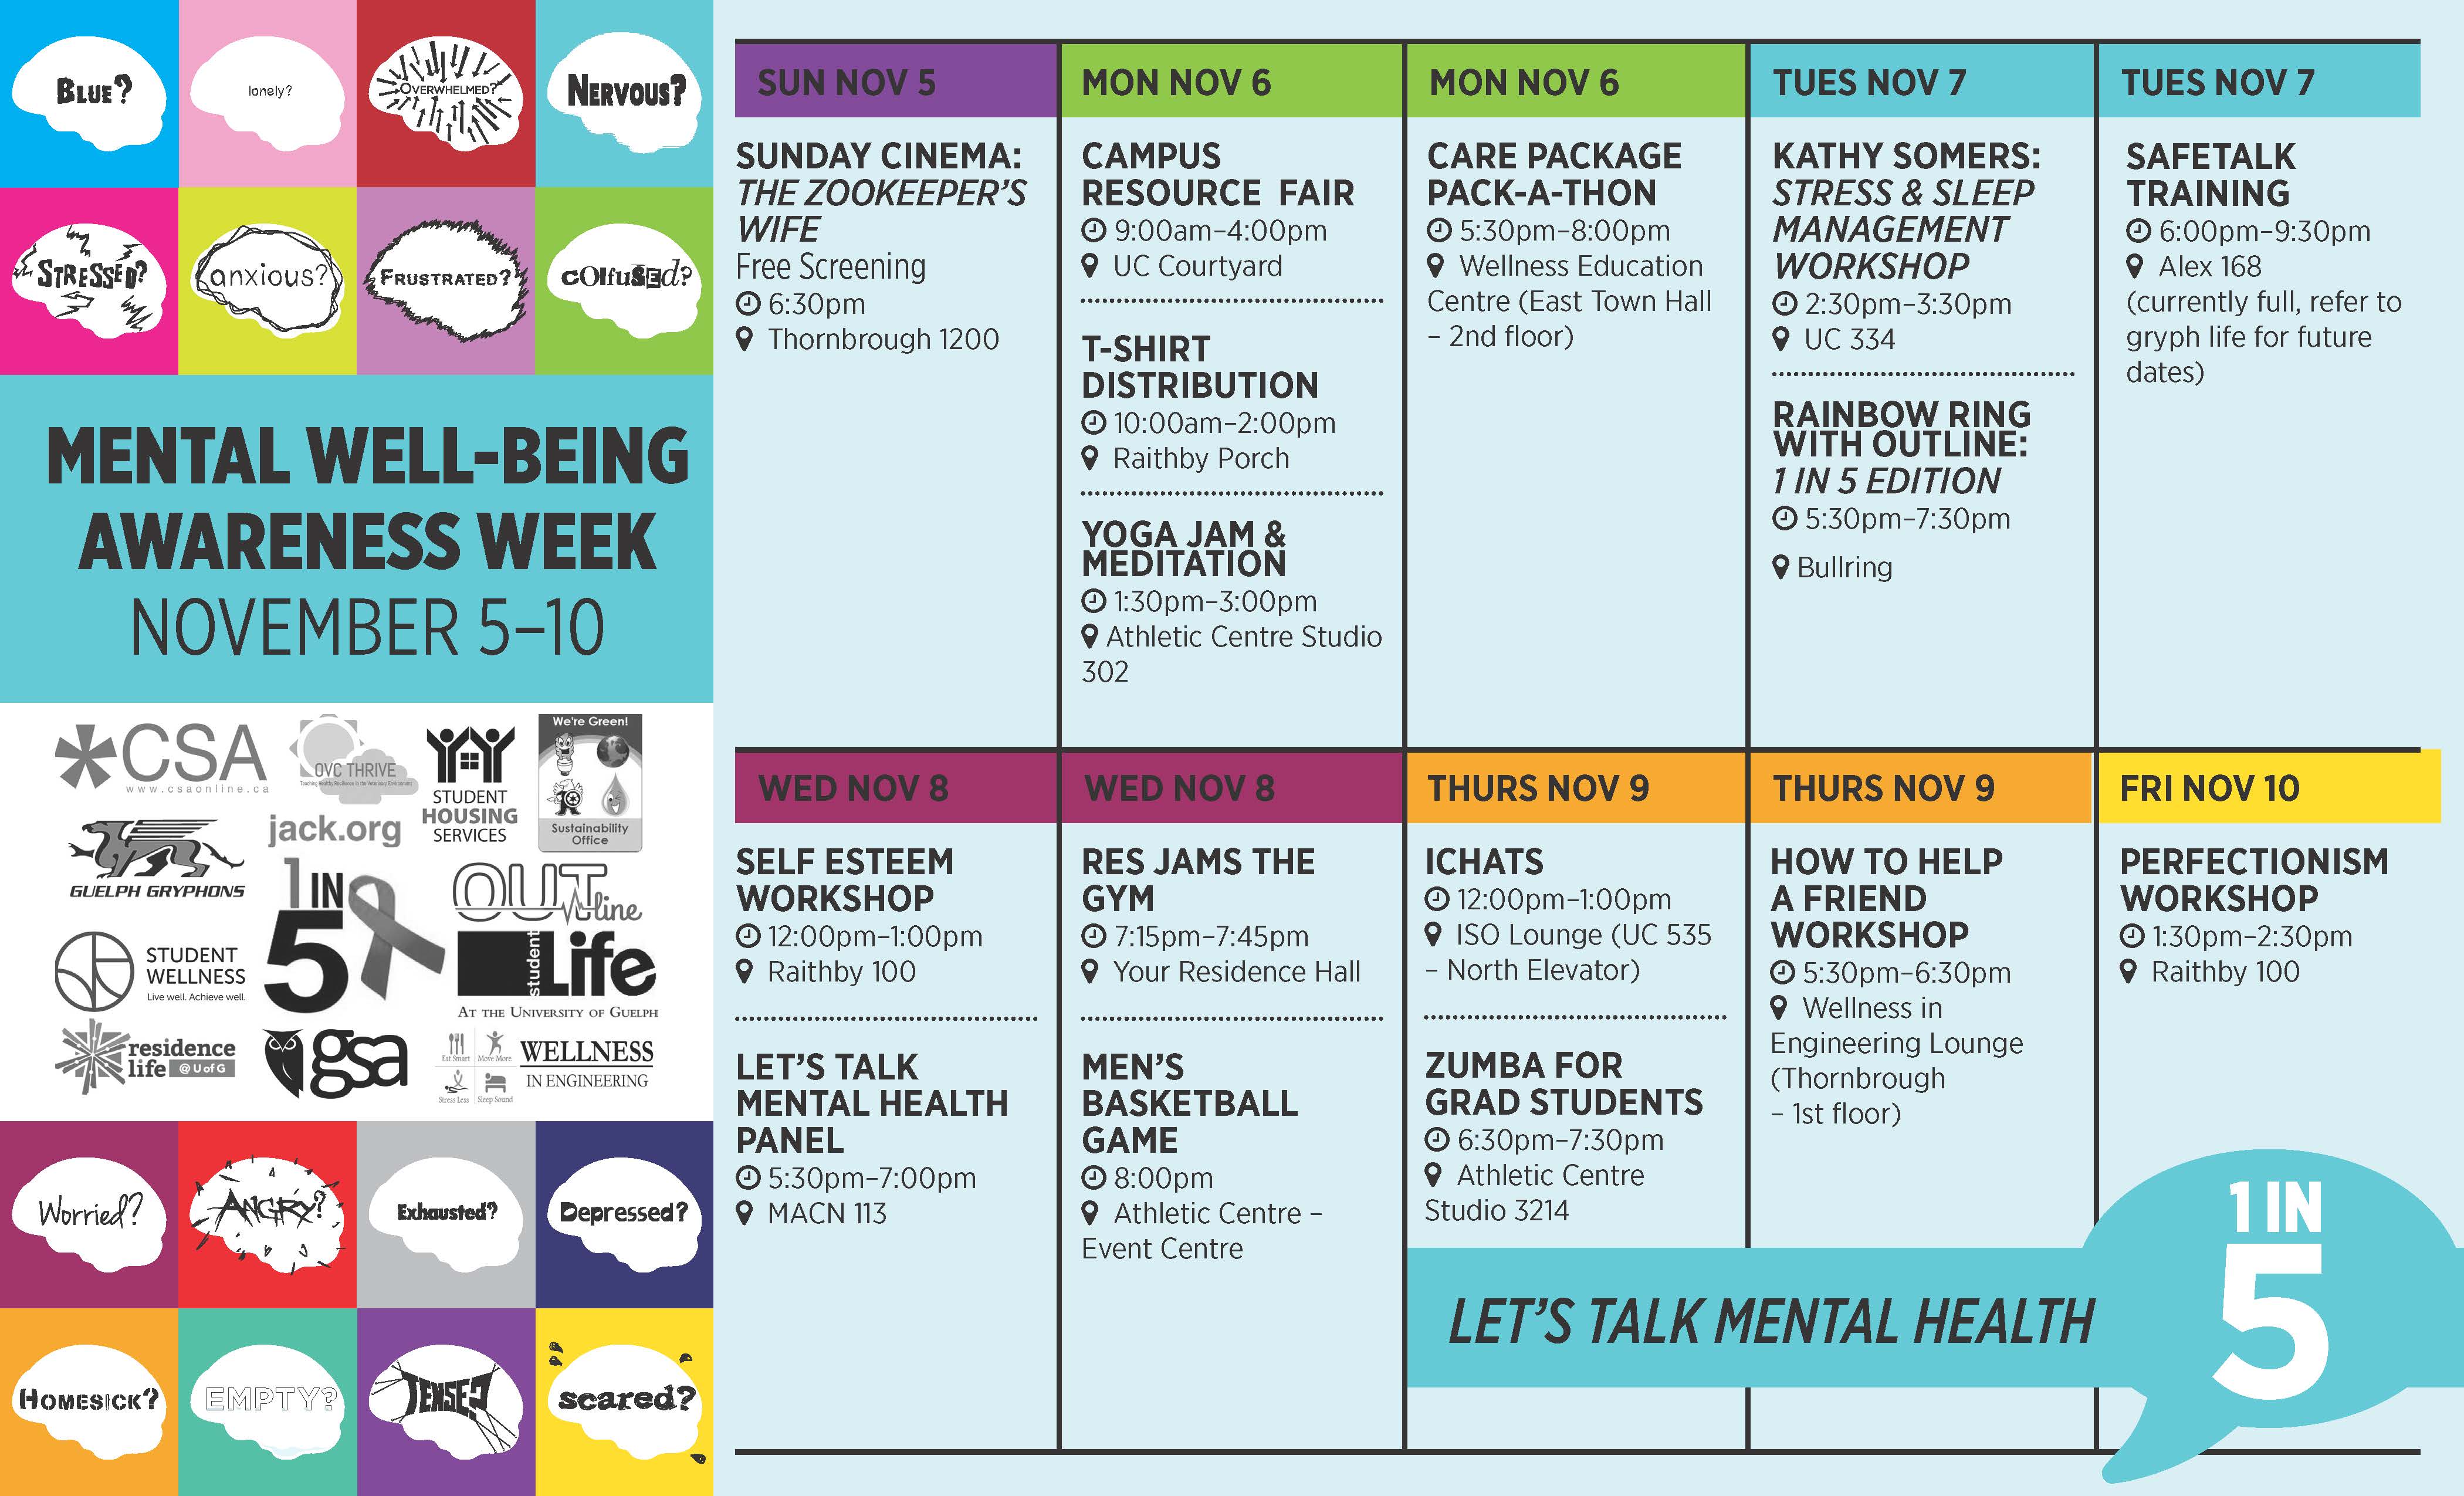 Calendar listing events for 1 in 5 Mental Wellbeing Week